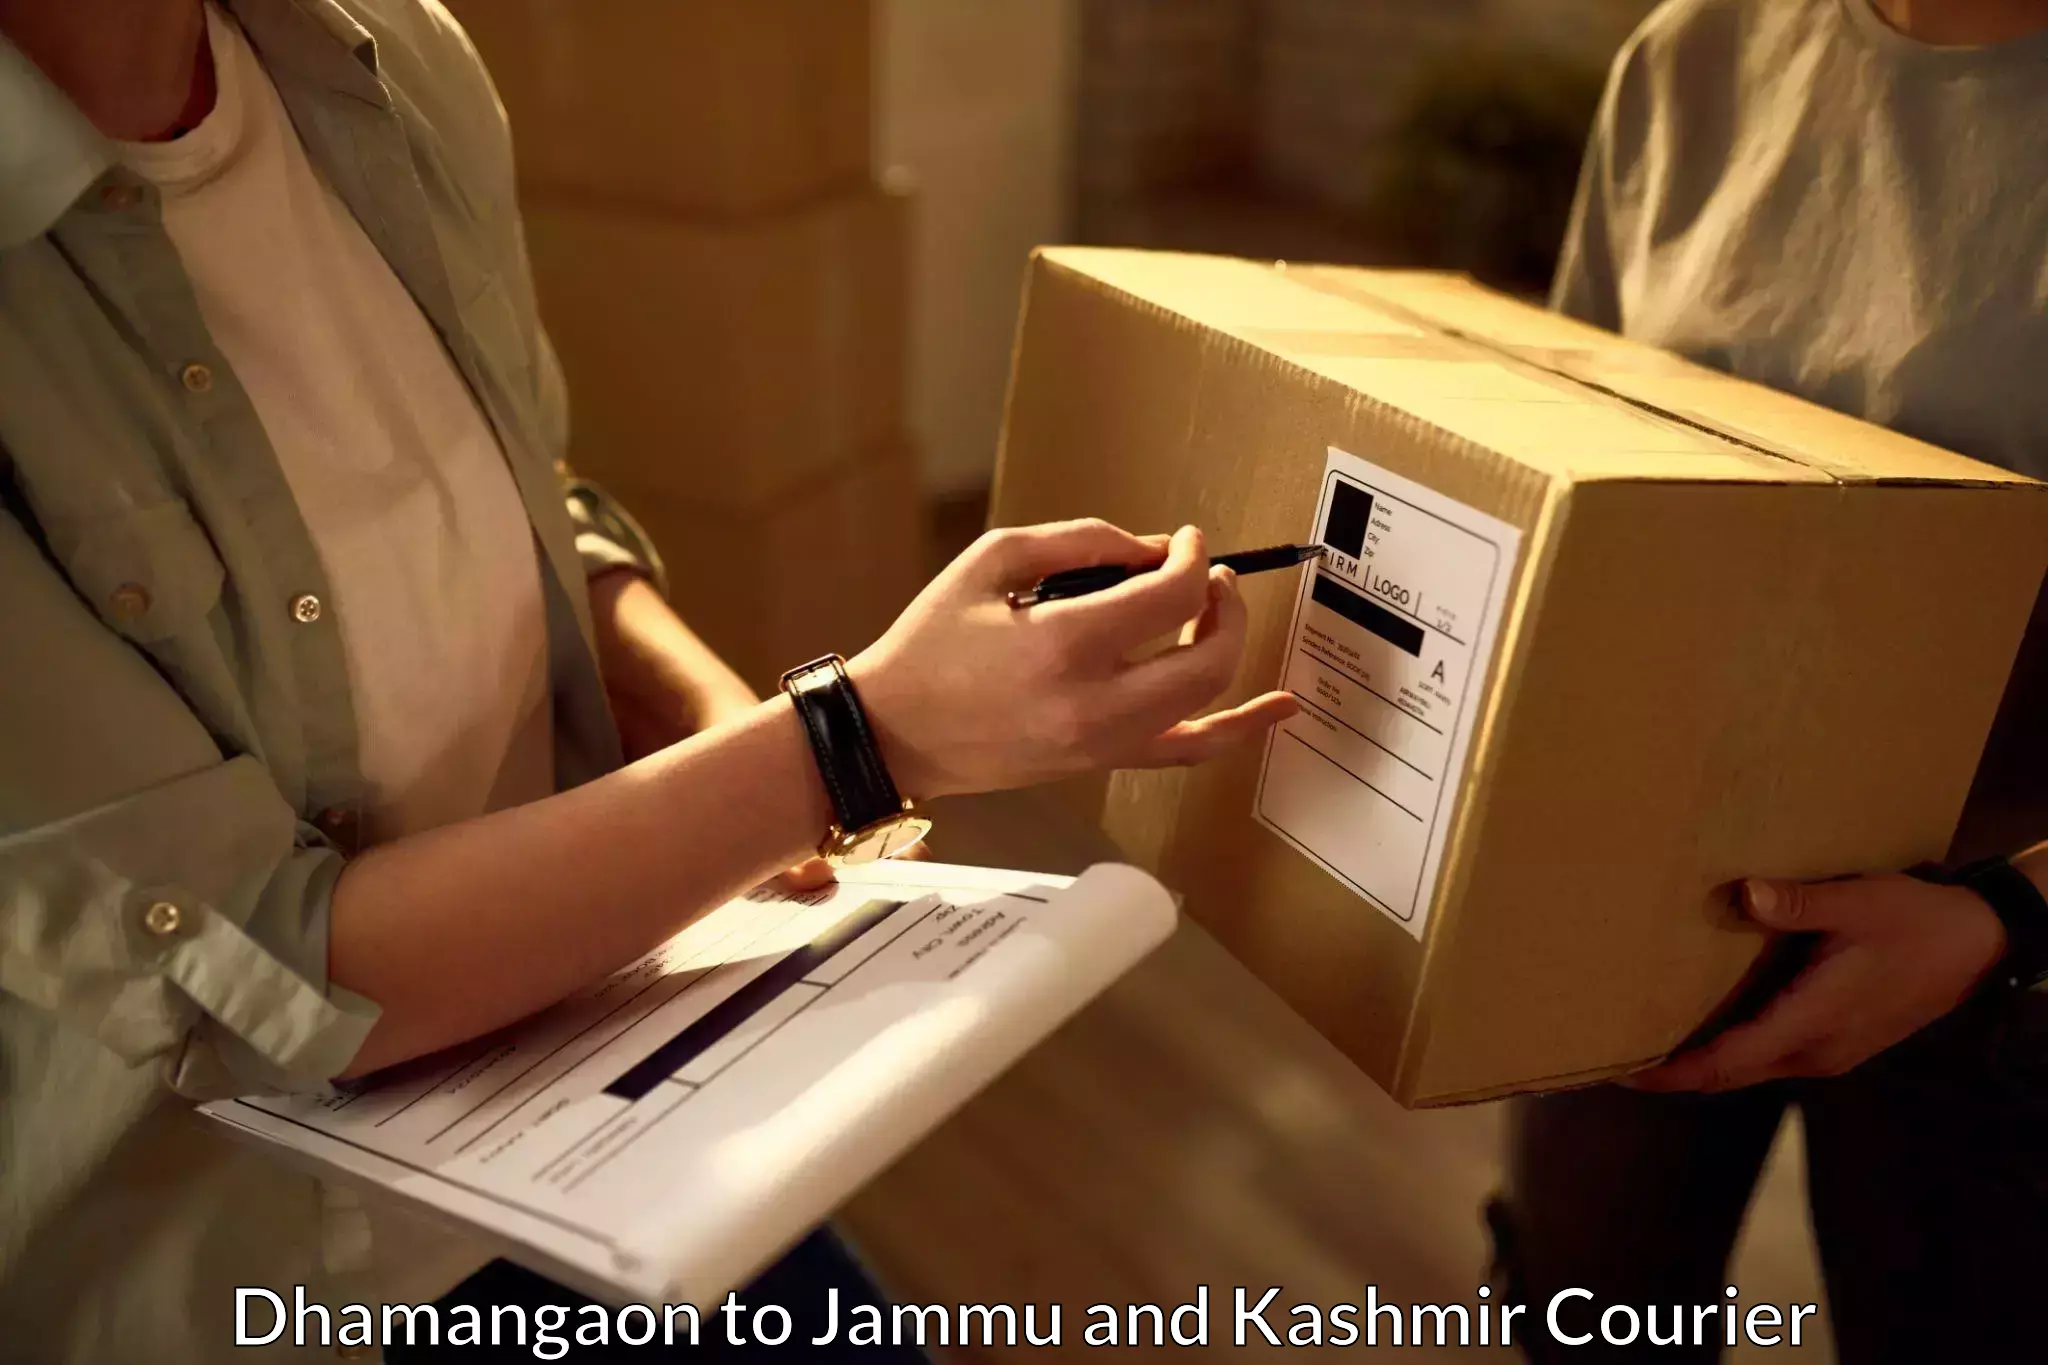 Courier service partnerships Dhamangaon to Shopian